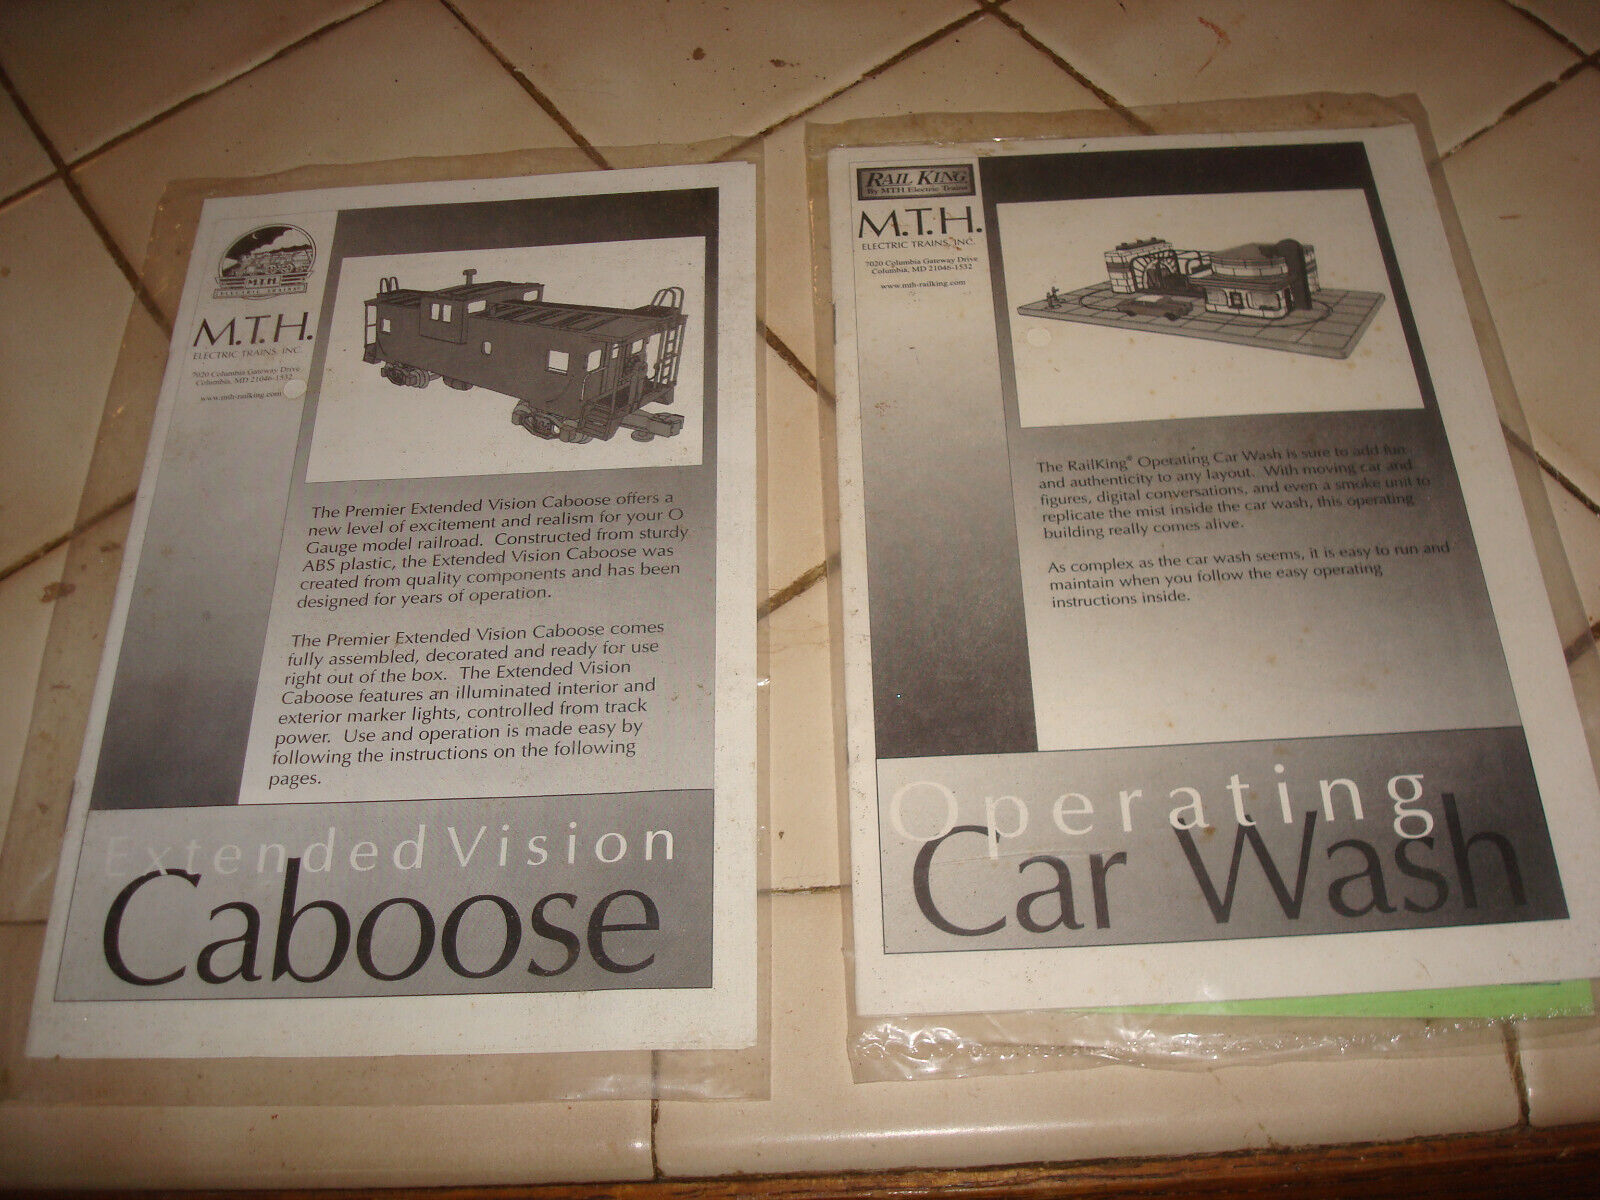 MTH Operating Car Wash Manual & Caboose Manual